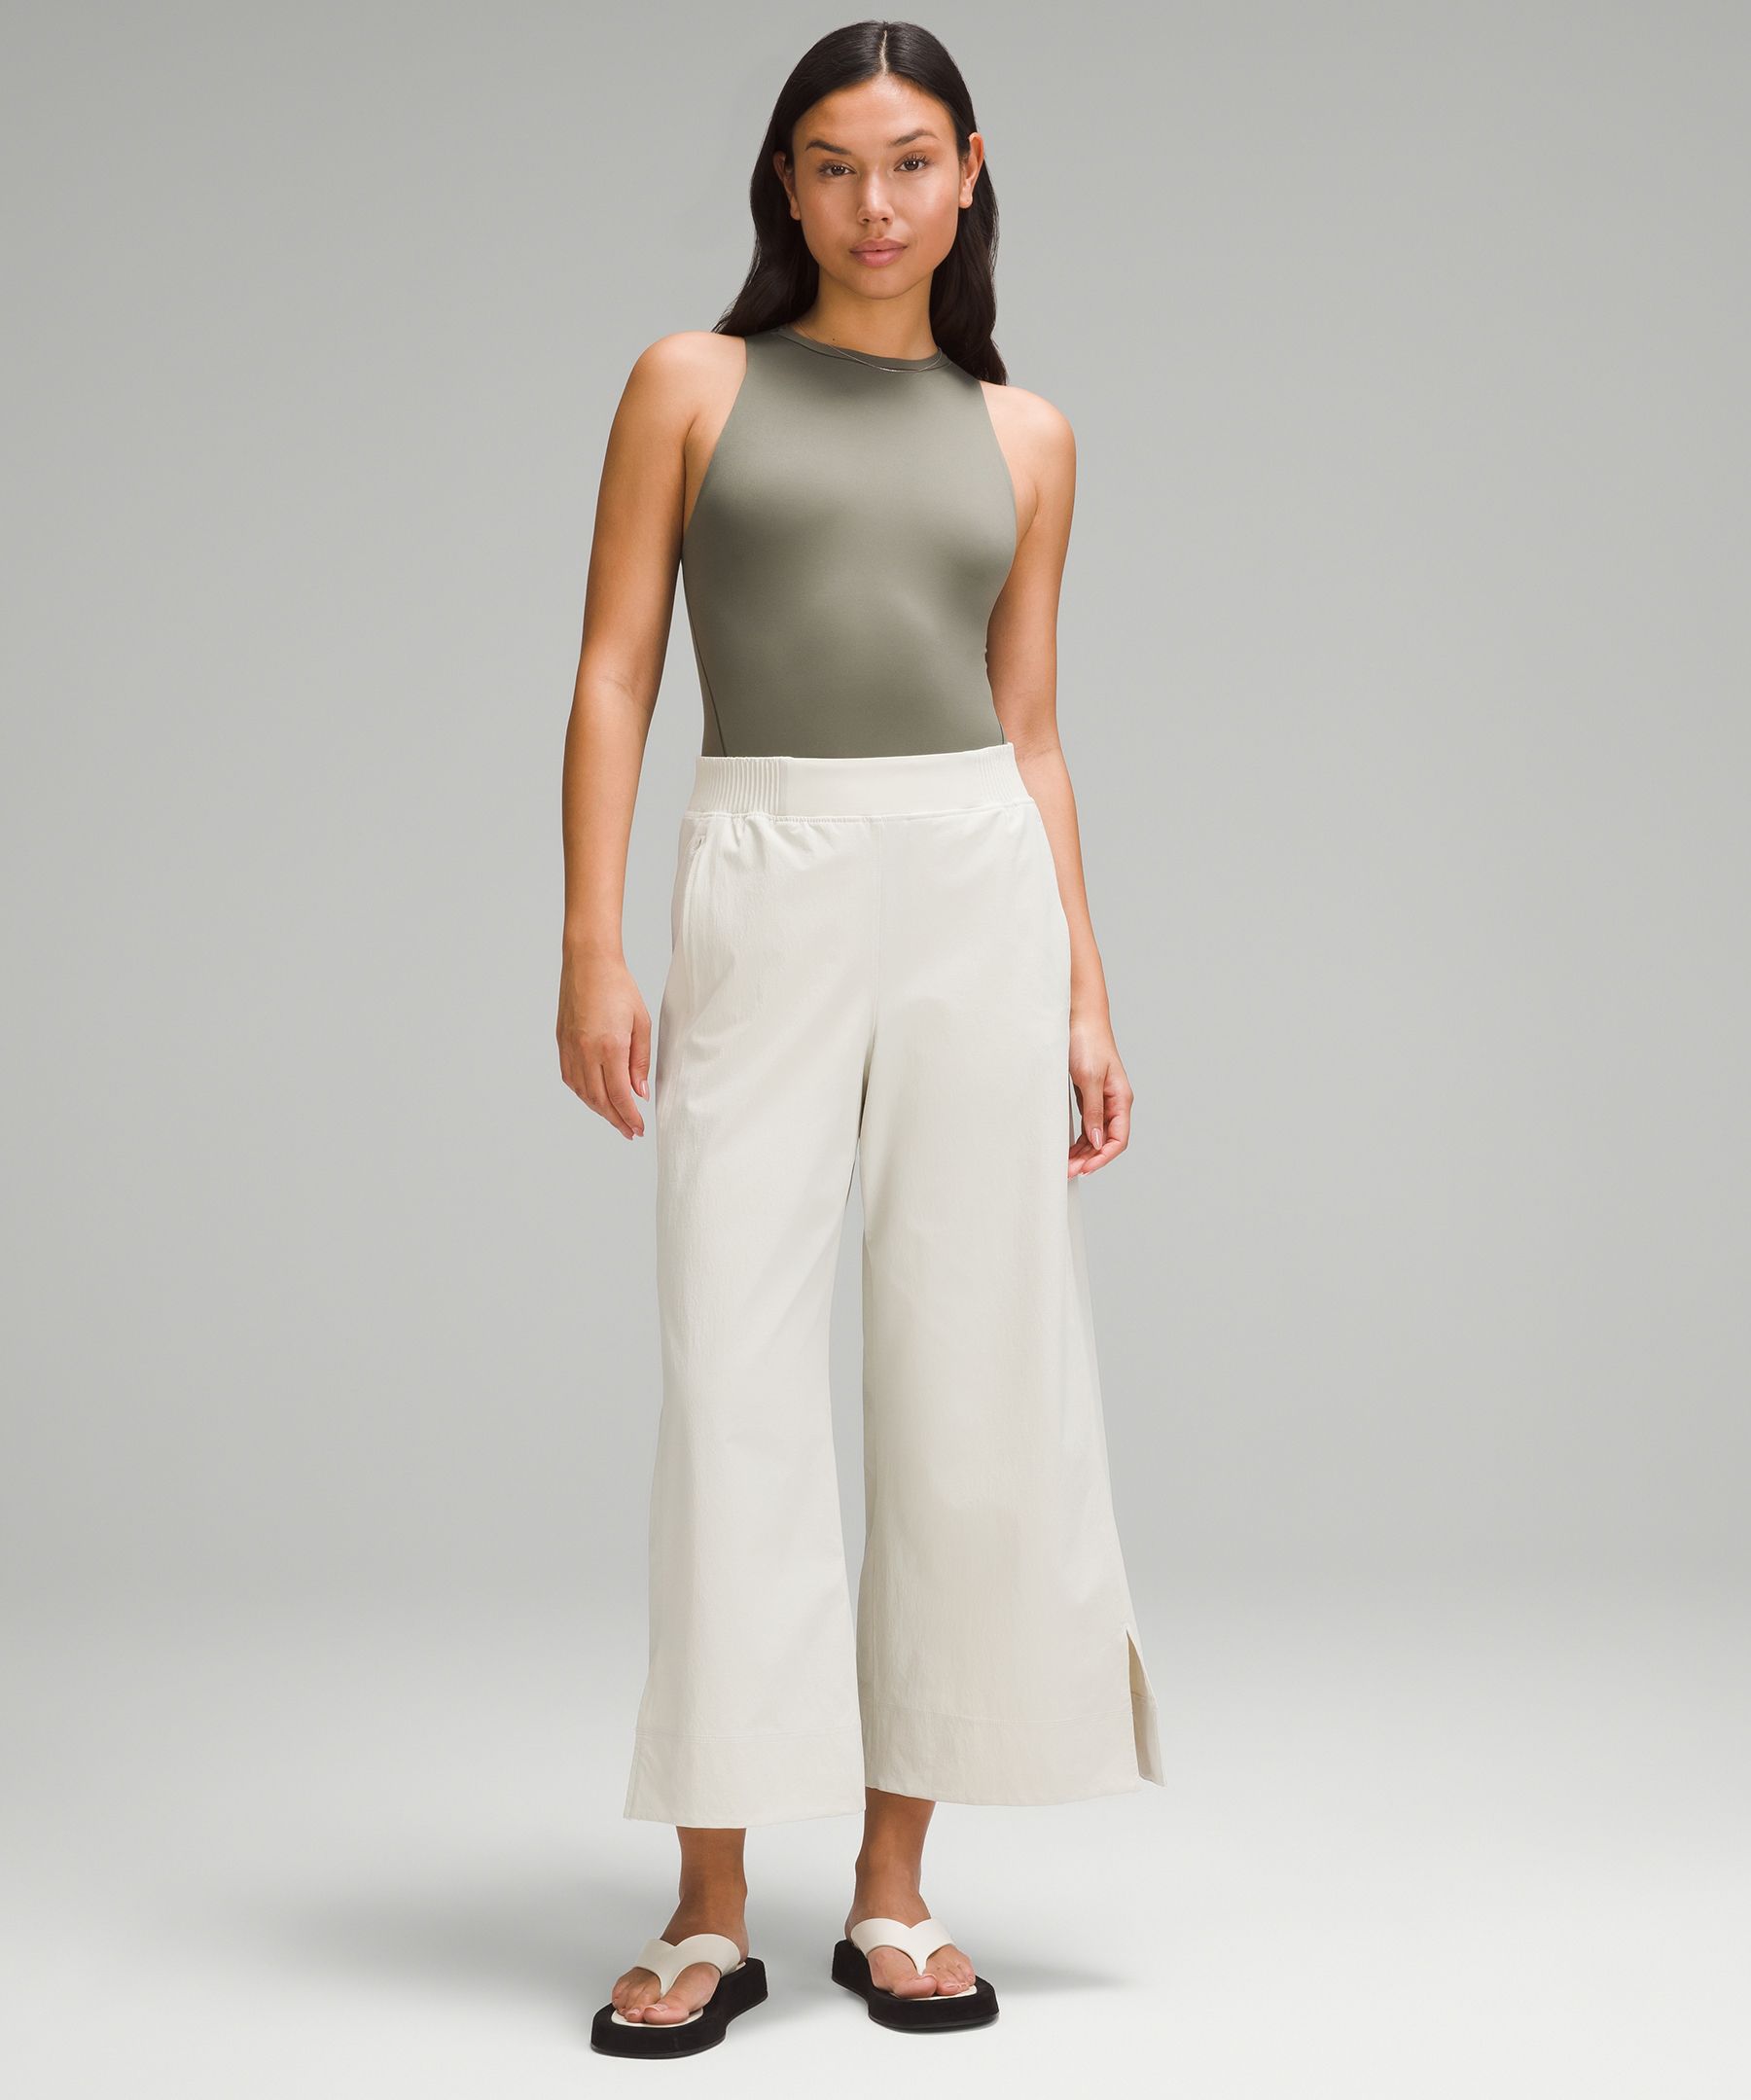 Women's Lululemon Balance and Resist Bodysuit - Grey and White Size 6